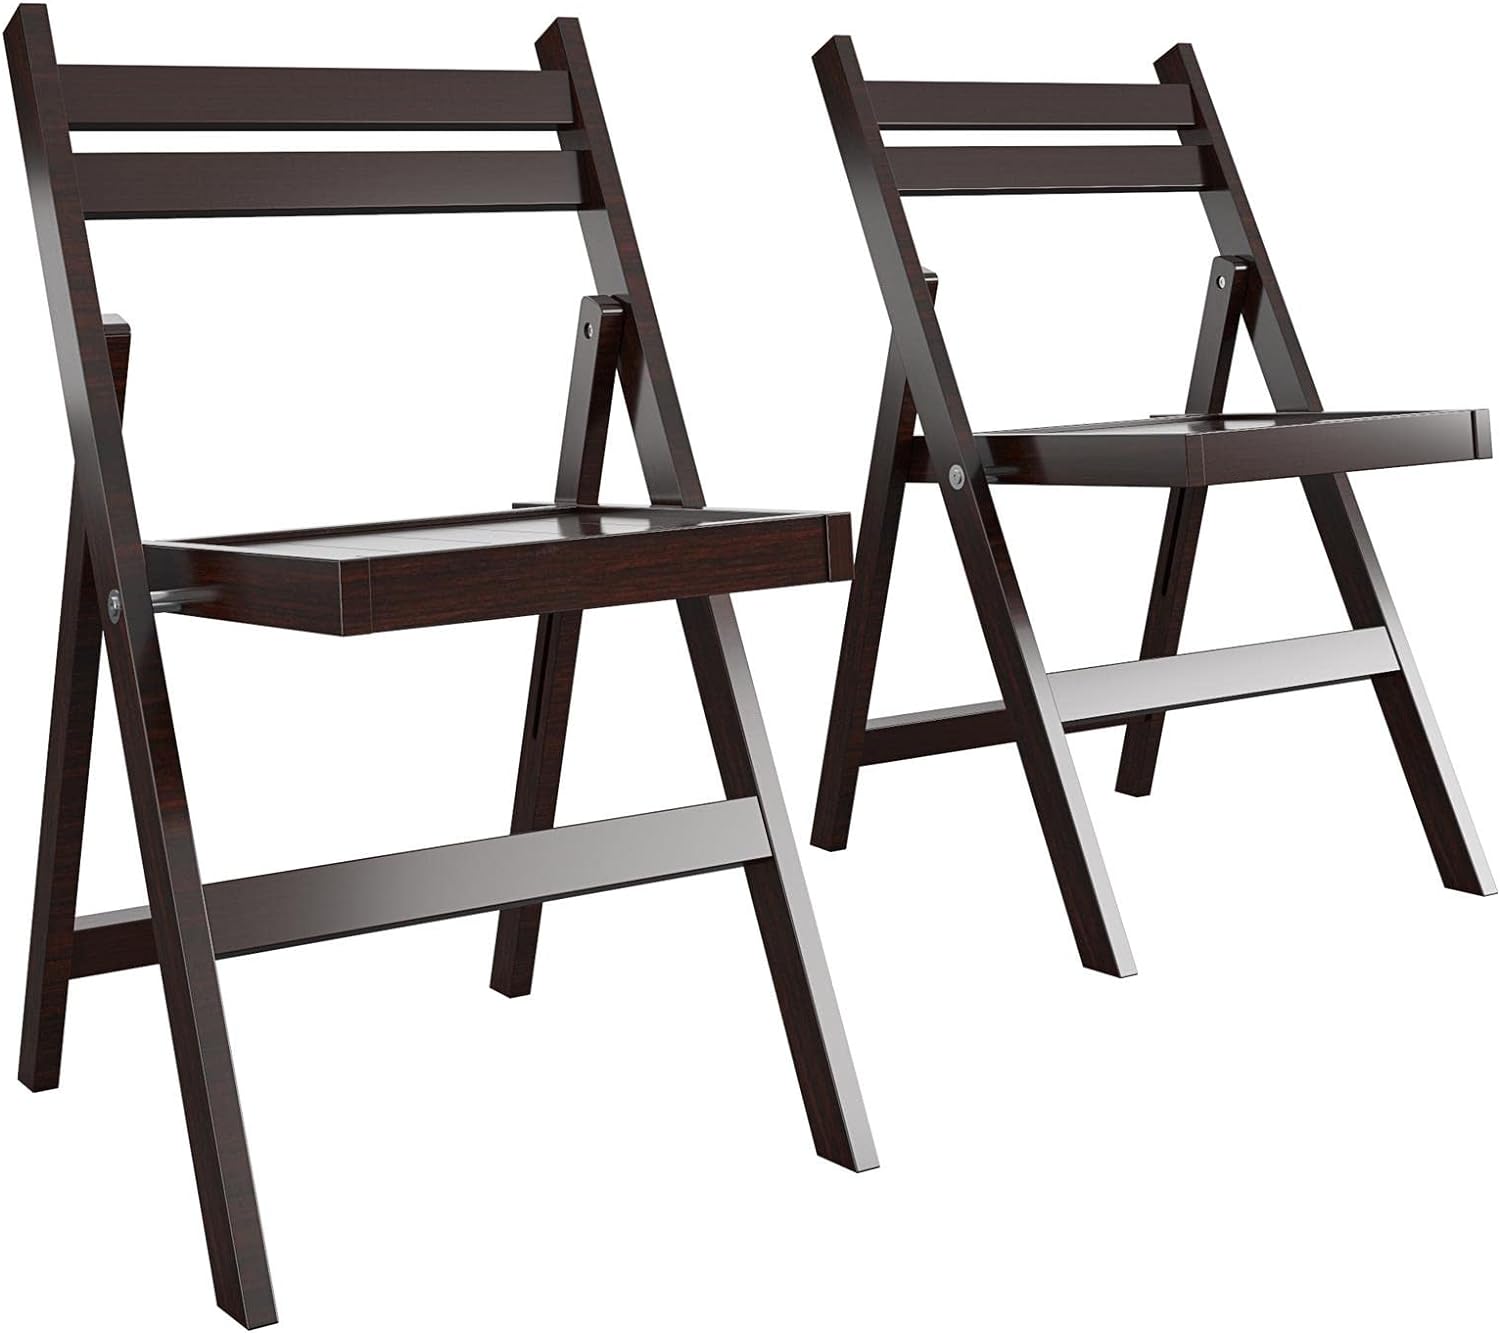 CoscoProducts COSCO XL Wood Slat Back Folding Chair, 2-Pack, Dark Mahogany